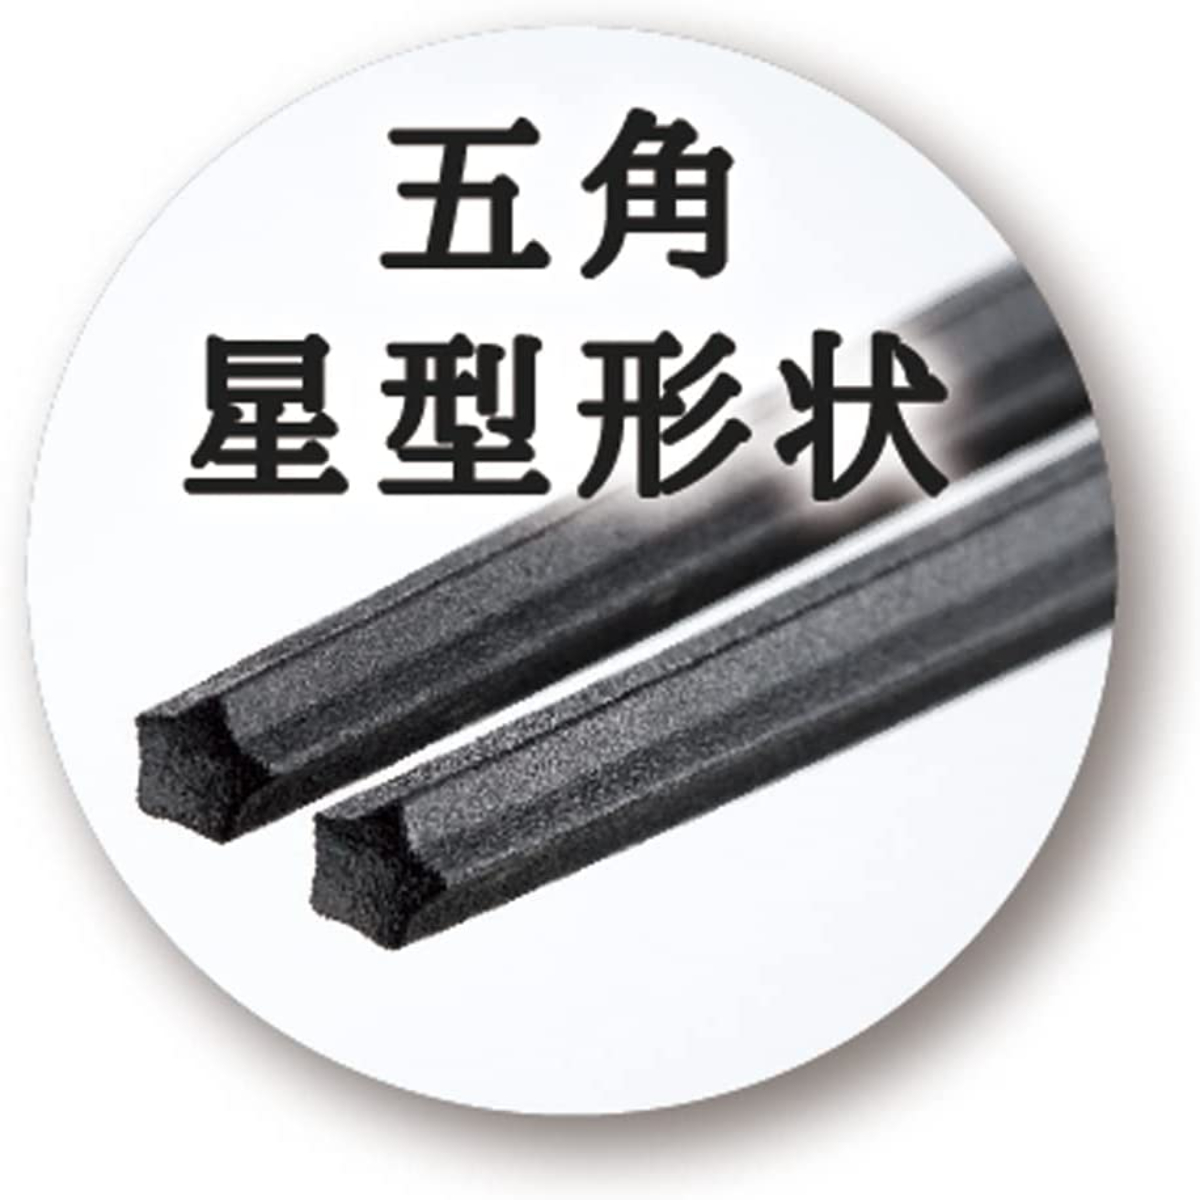 箸 取り箸 30cm 先五角 星型 日本製 食洗機対応 ブラック_3